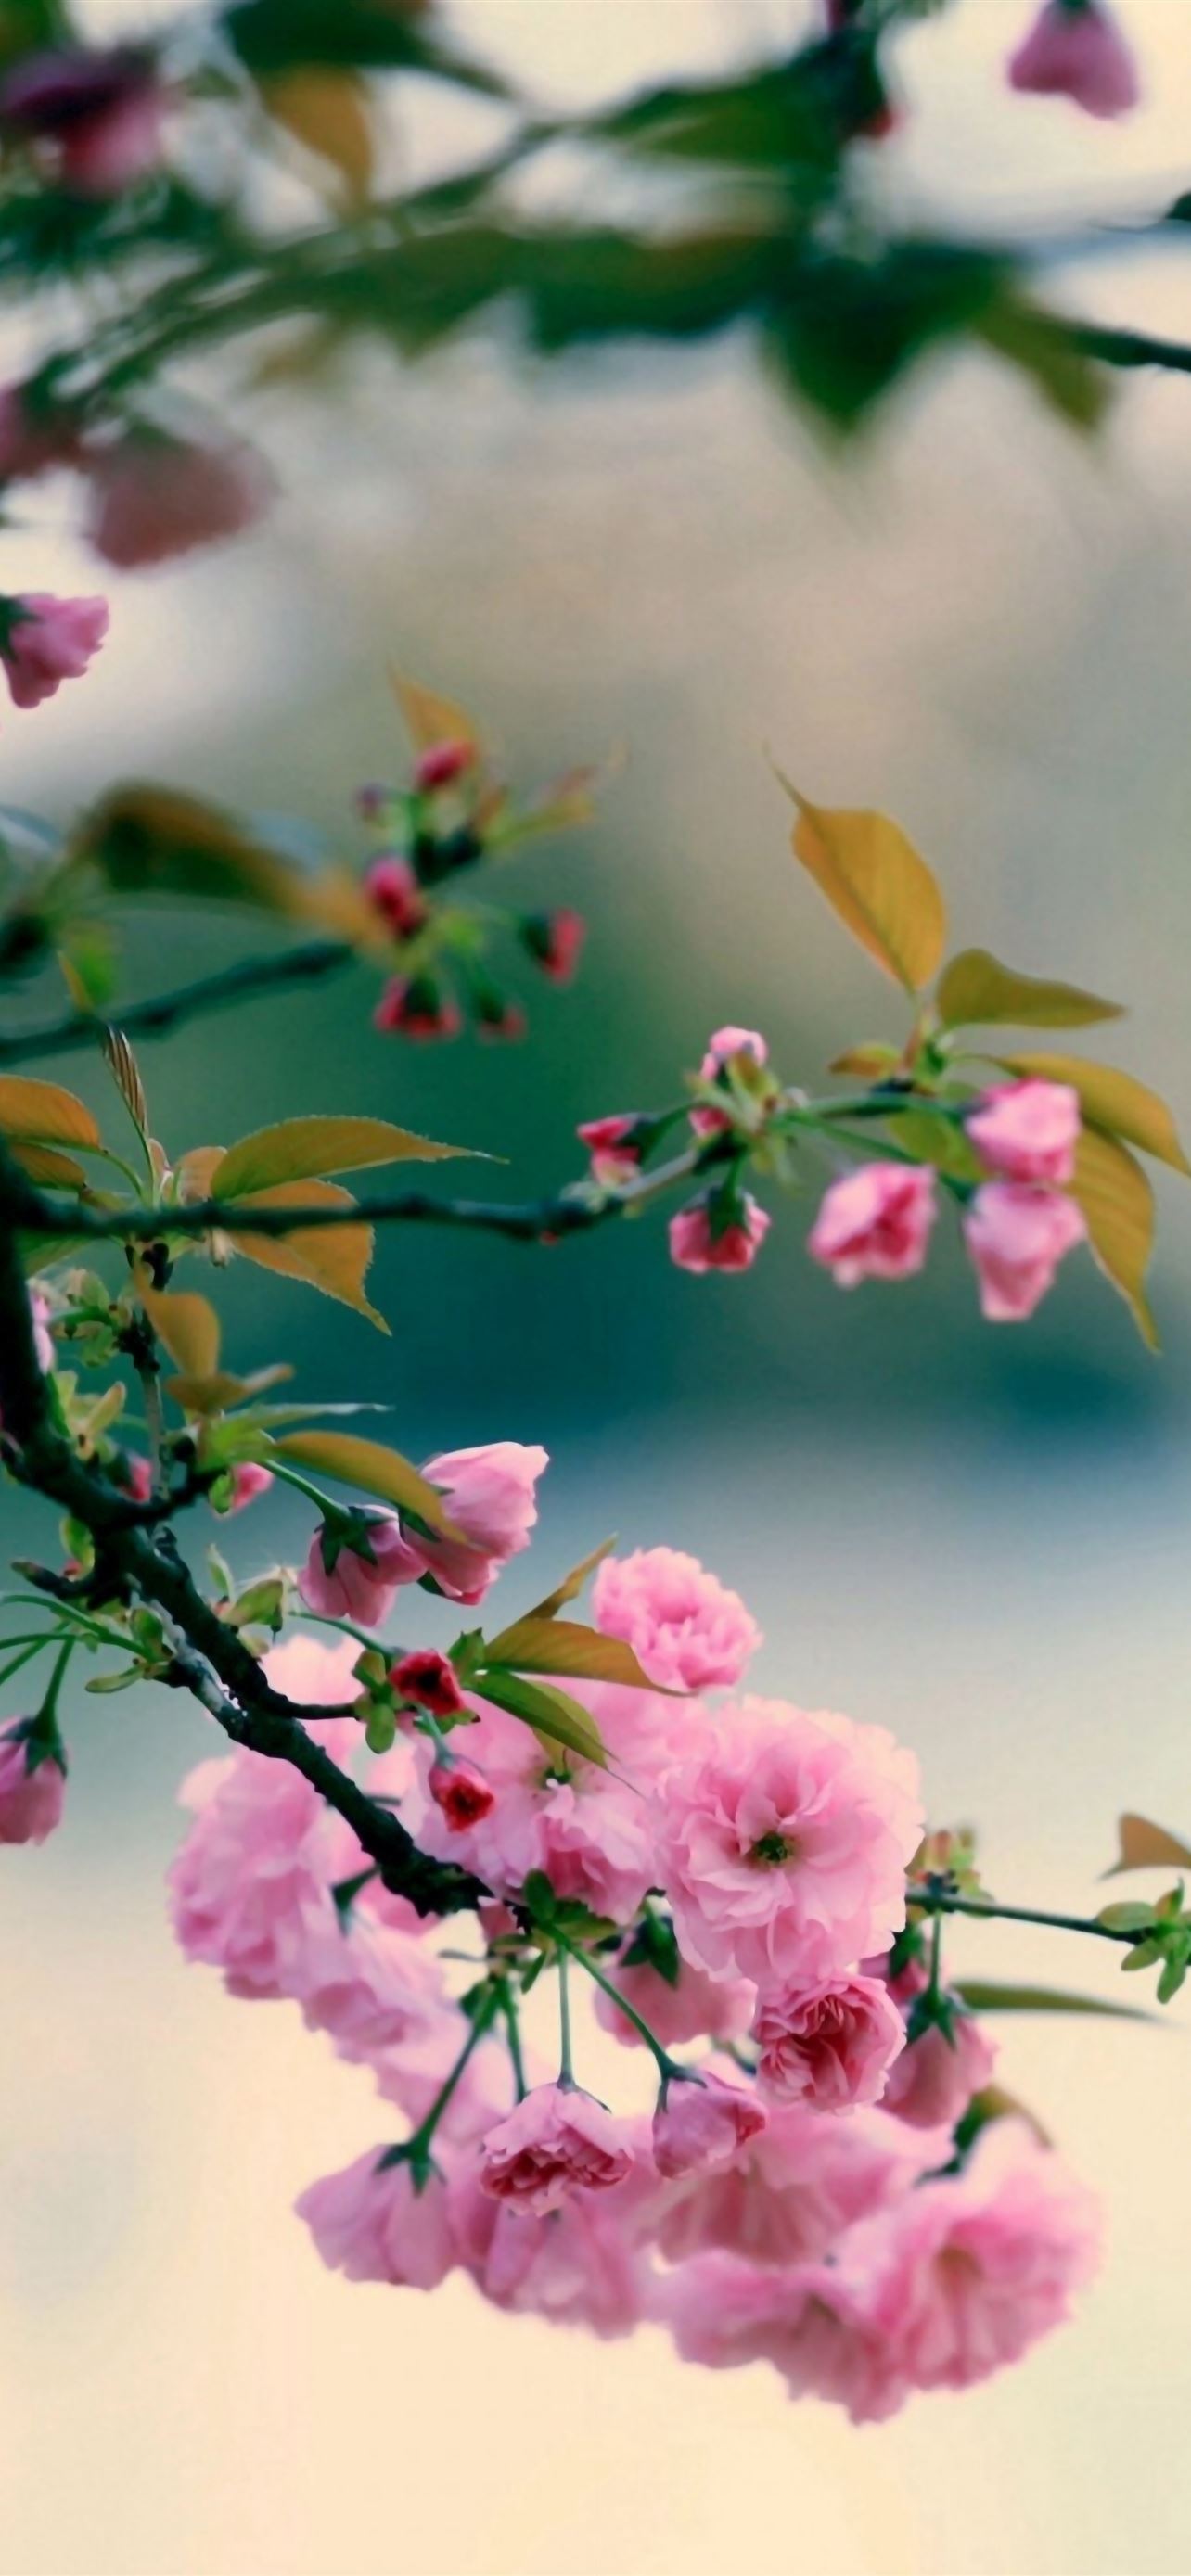 Nature Spring Plum Branch Bokeh Blur